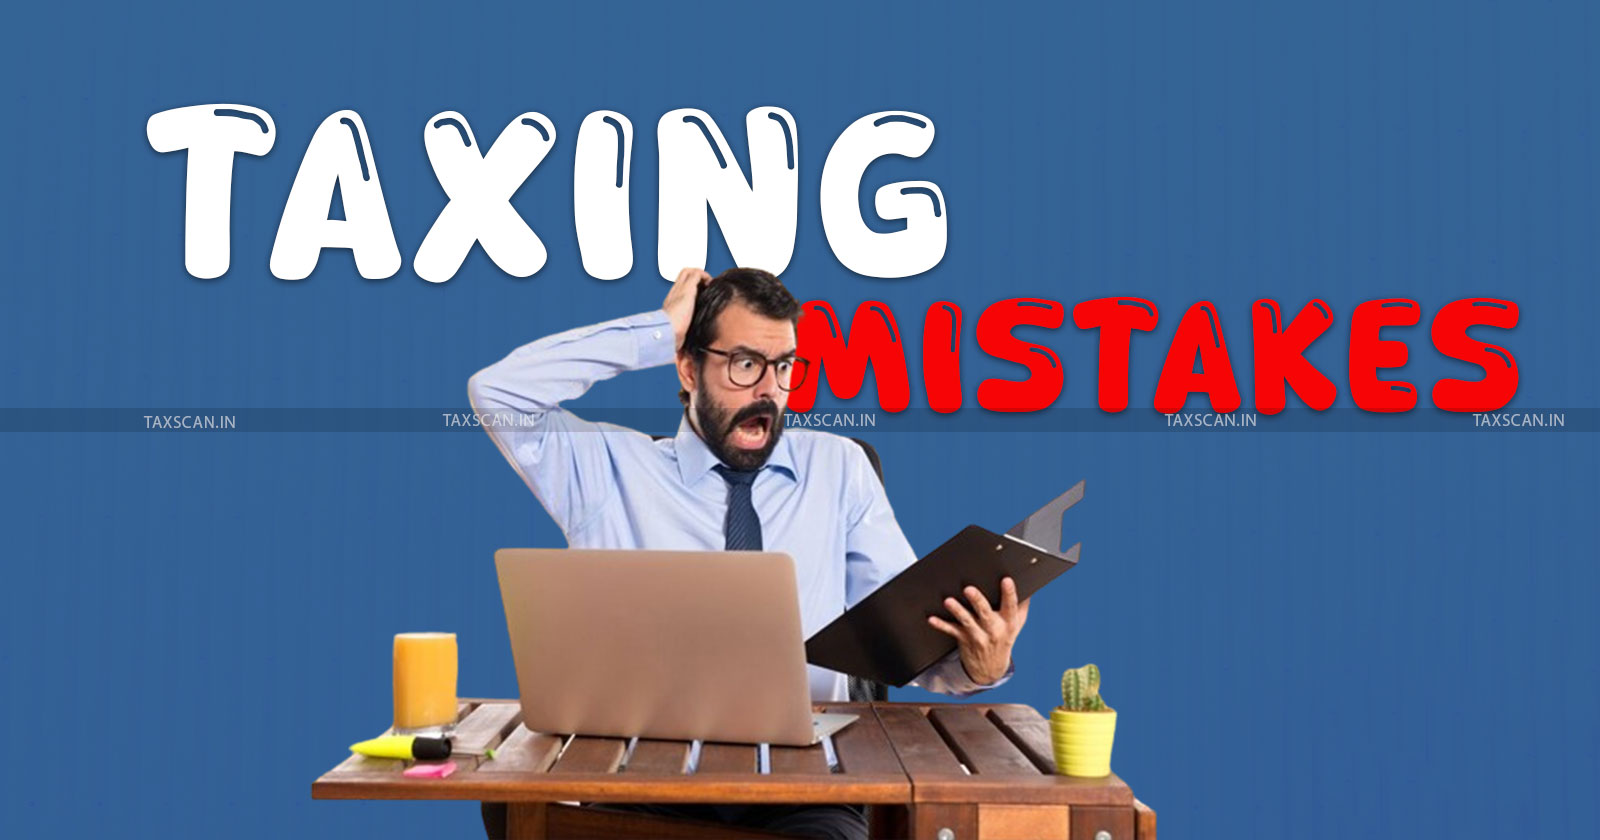 Income tax news - Commissioner of Income Tax - Trust registration - Trust taxation - Trust taxing mistake - taxscan